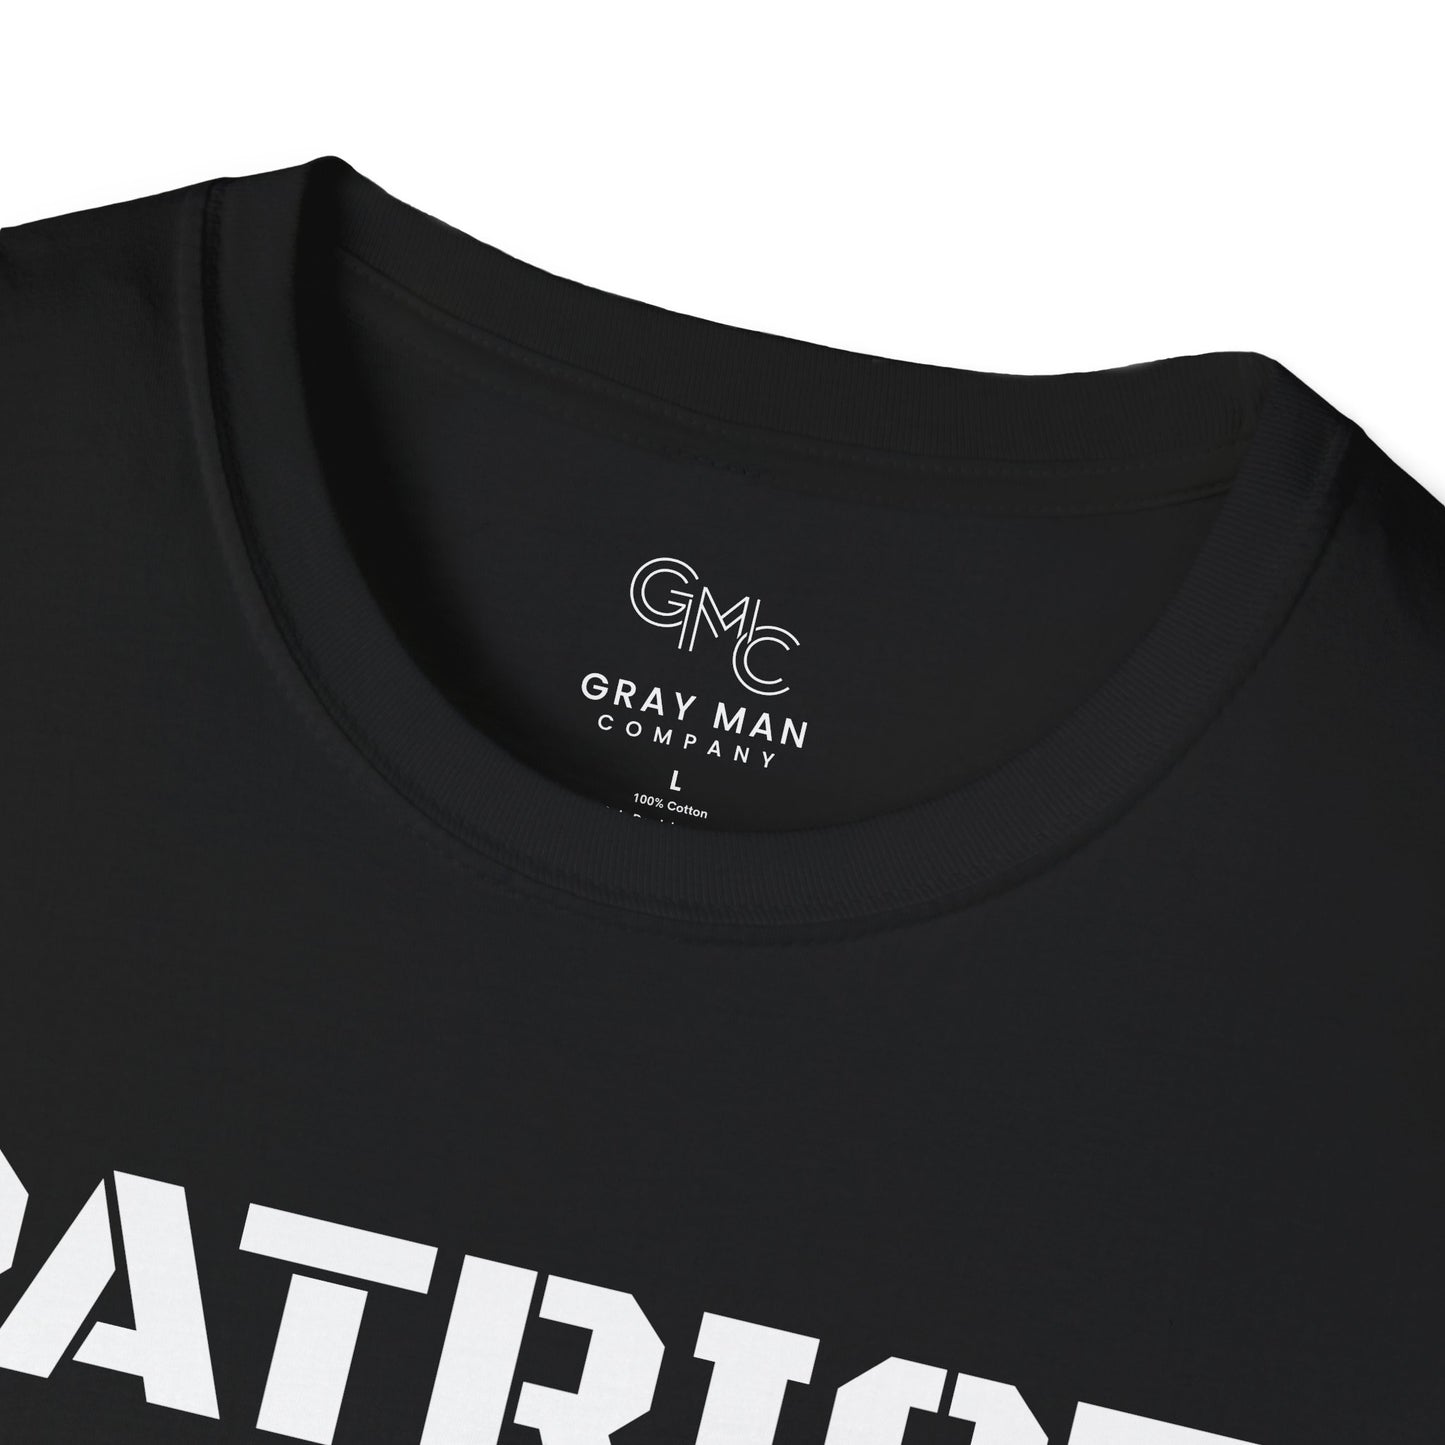 EDC Graphic T-Shirt - PATRIOT